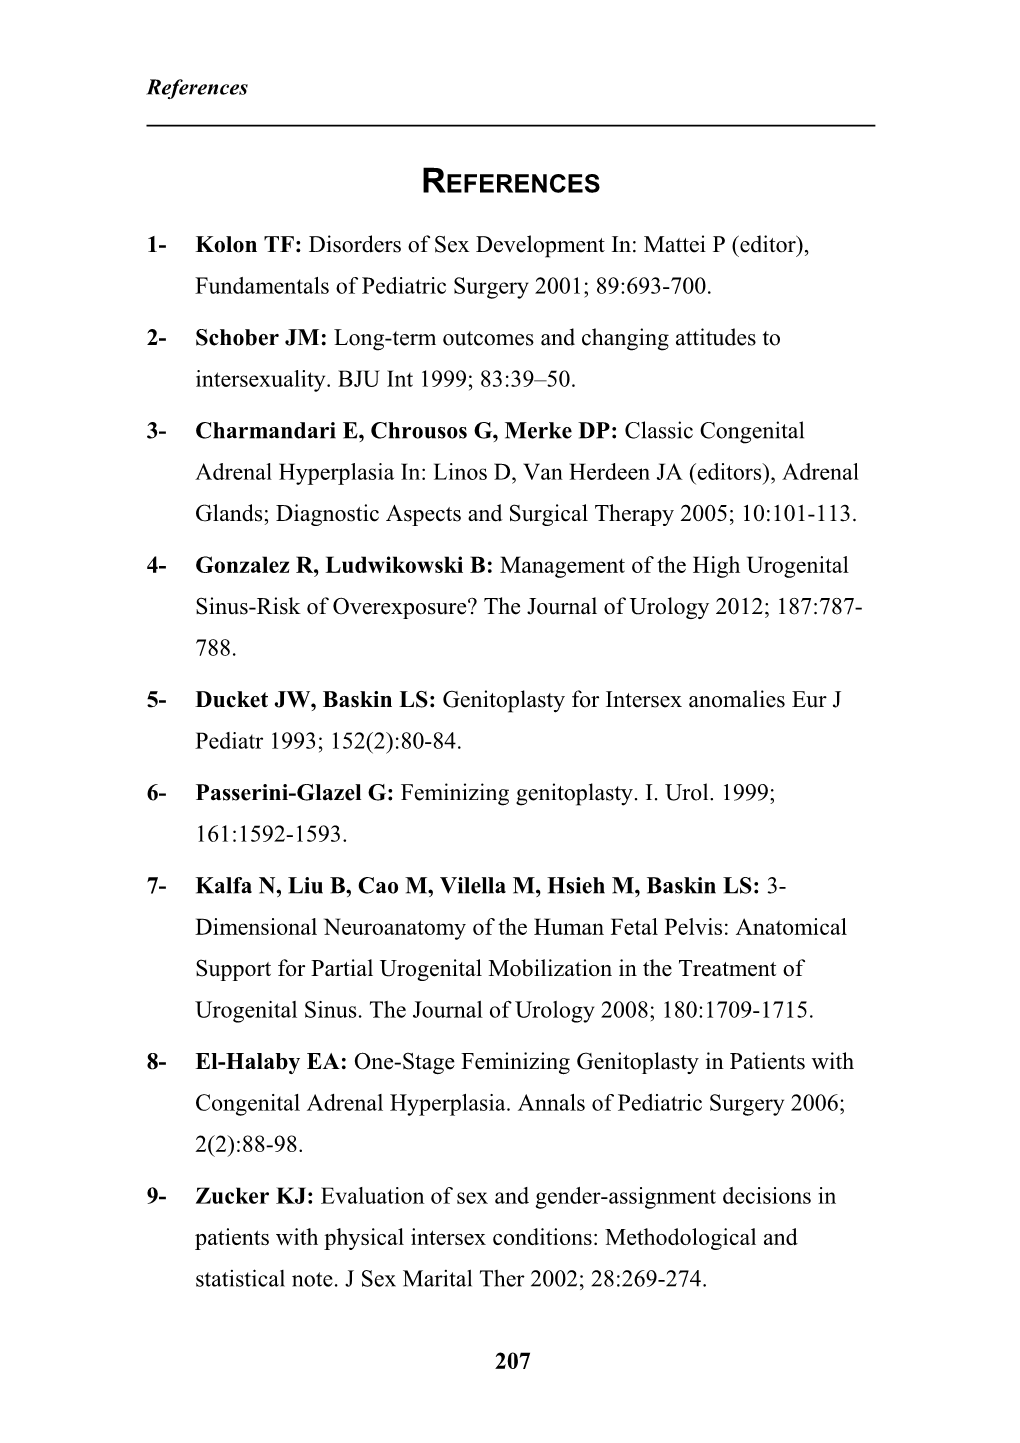 1- Kolon TF: Disorders of Sex Development In: Mattei P (Editor), Fundamentals of Pediatric